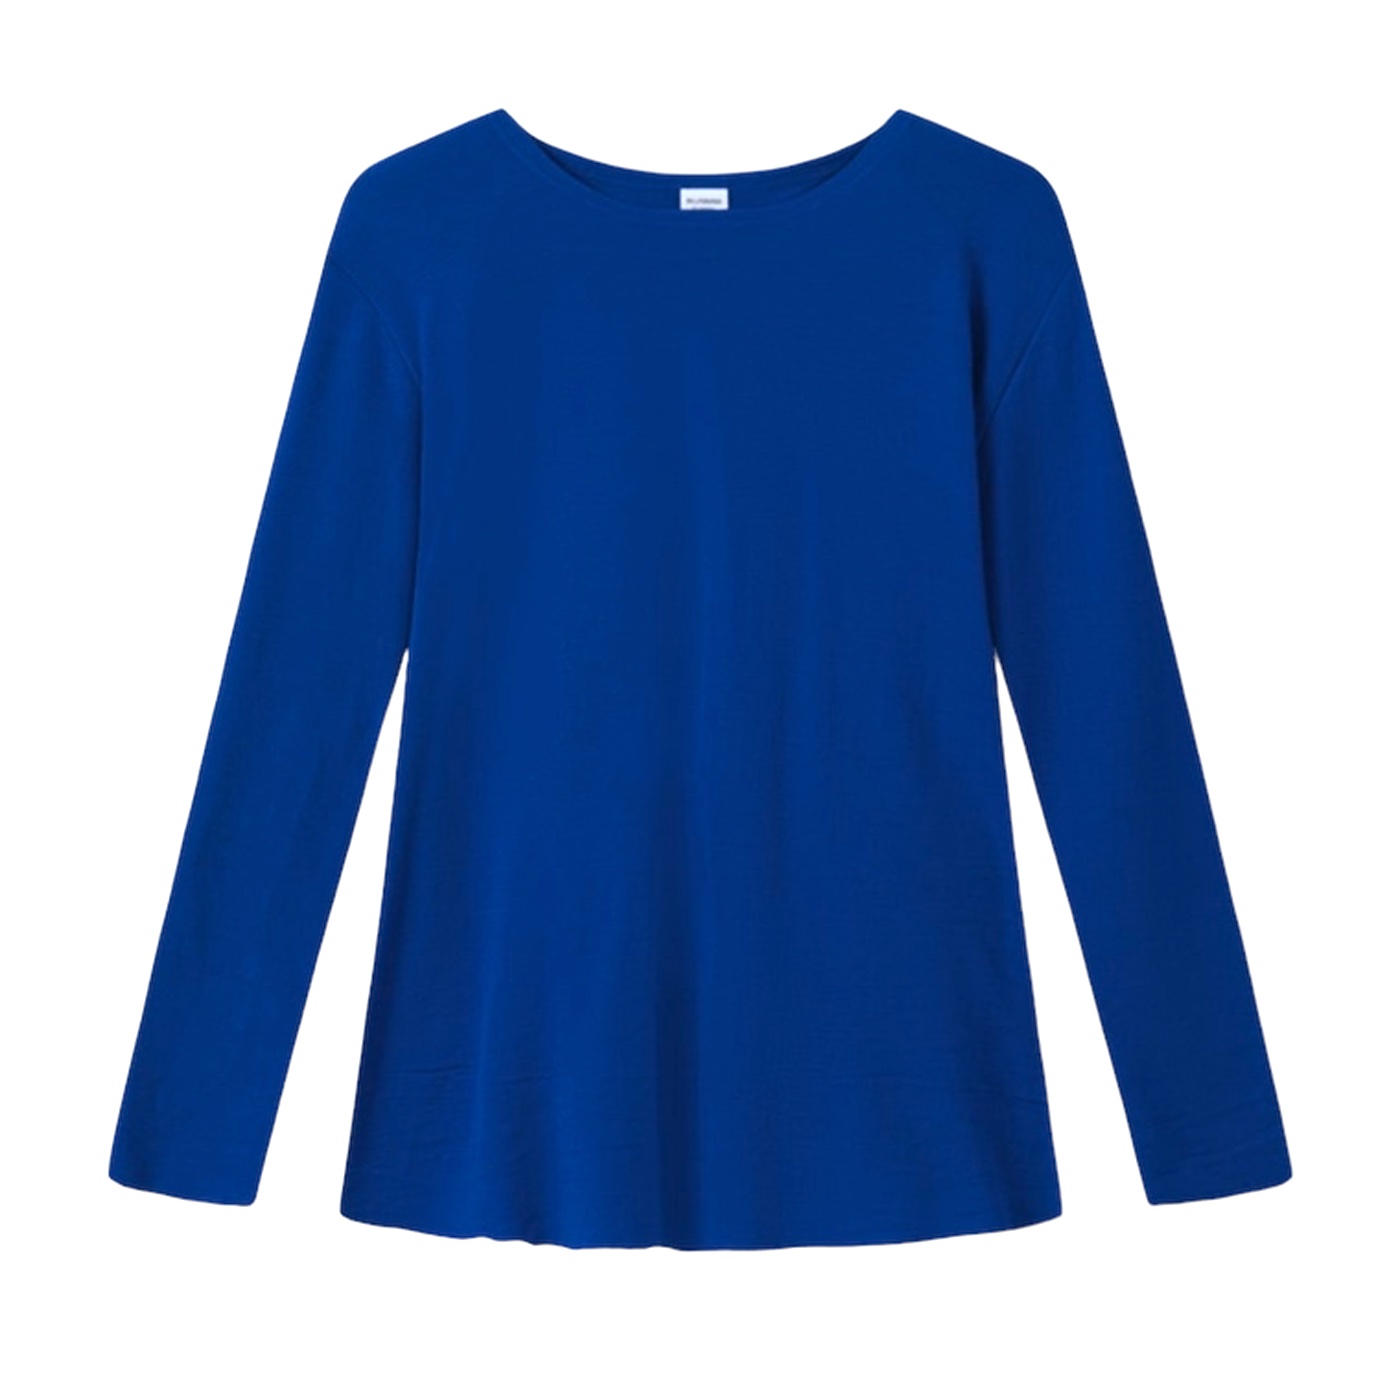 By Basics - Blusbar 4012 bluse øko-tex merino uld A-facon "Cobolt blå"